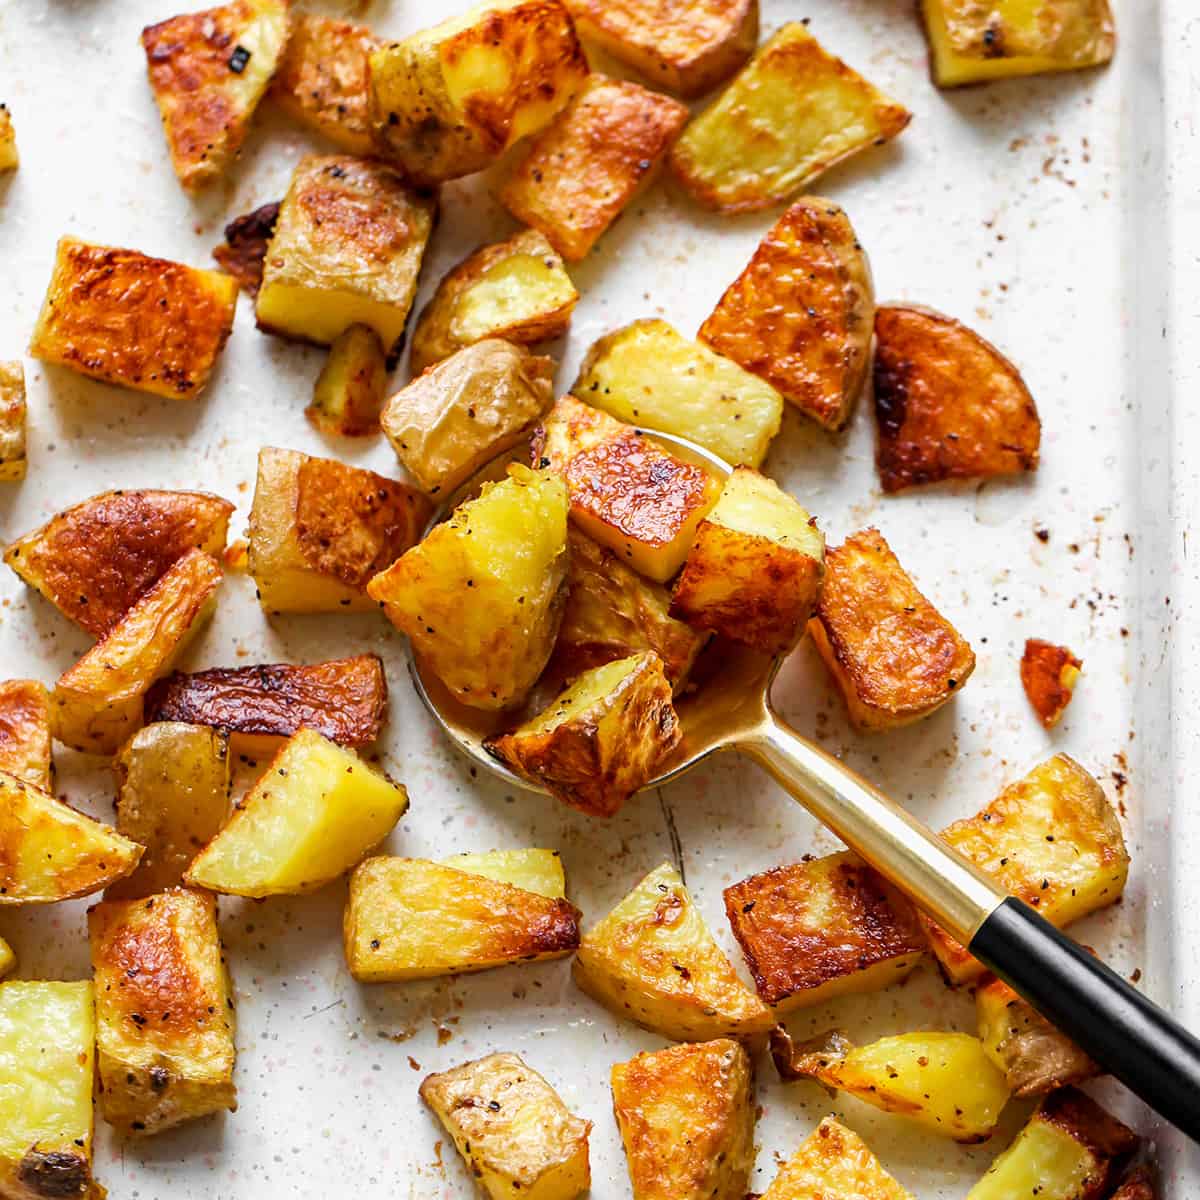 Savory Healthy Breakfast Ideas oven roasted potatoes